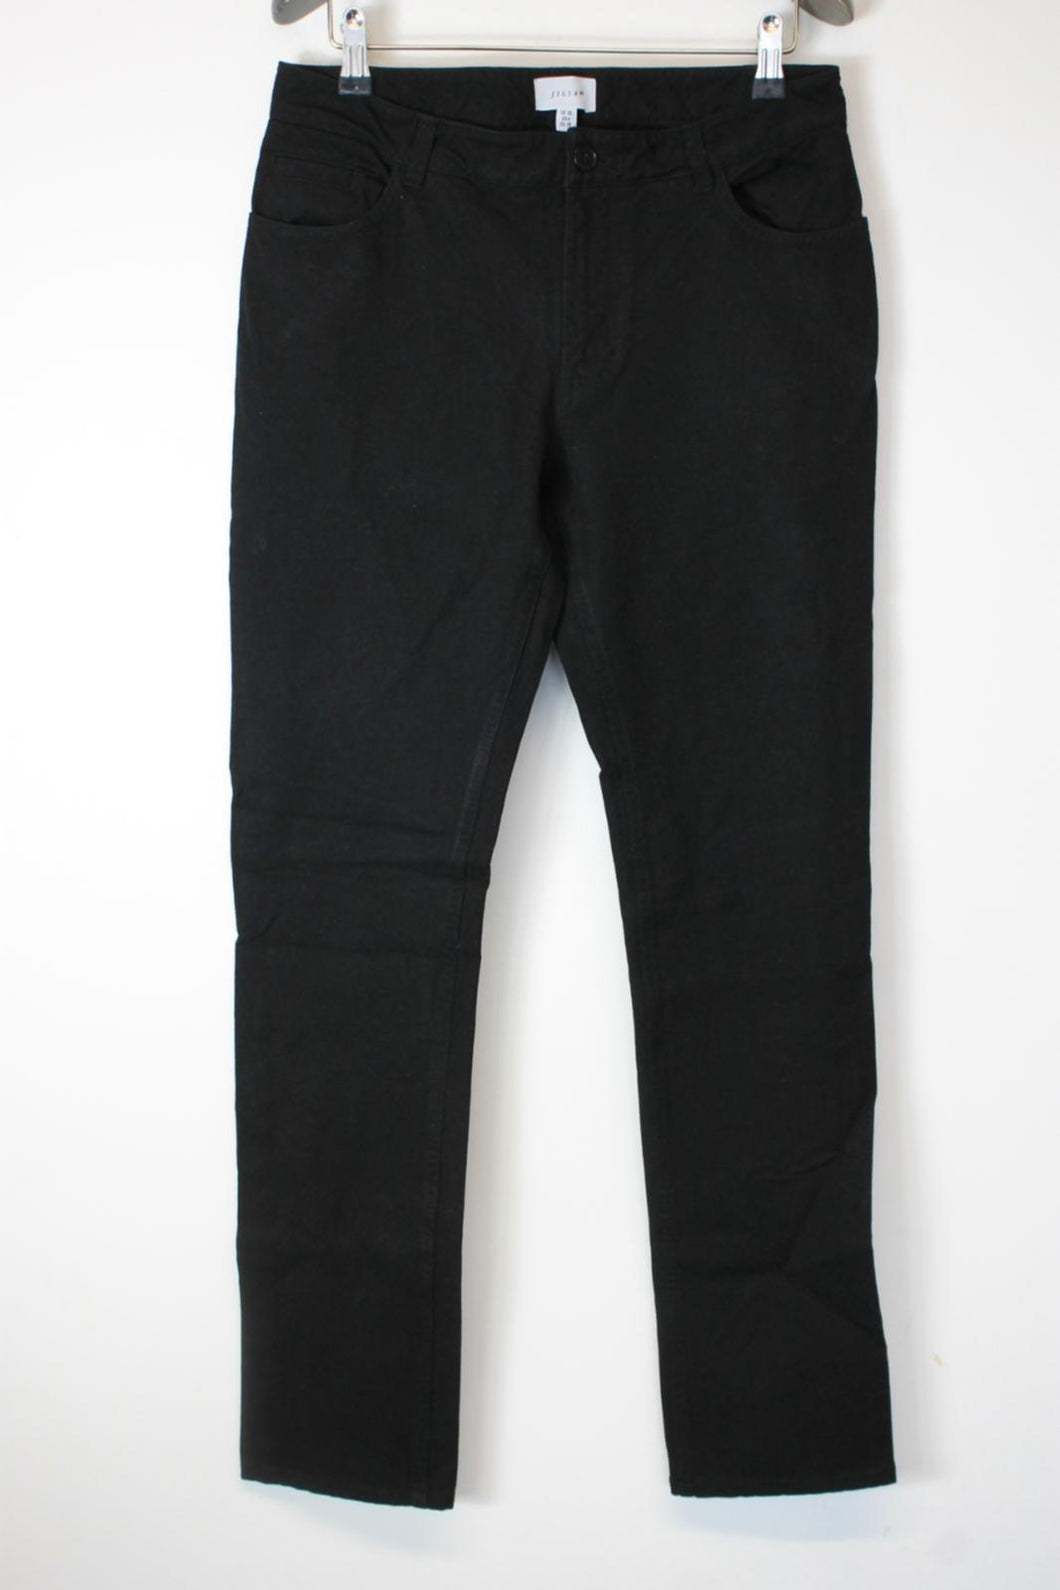 JIGSAW Ladies Black Cotton Blend Bi-Stretch Straight Leg Jeans EU38 UK10